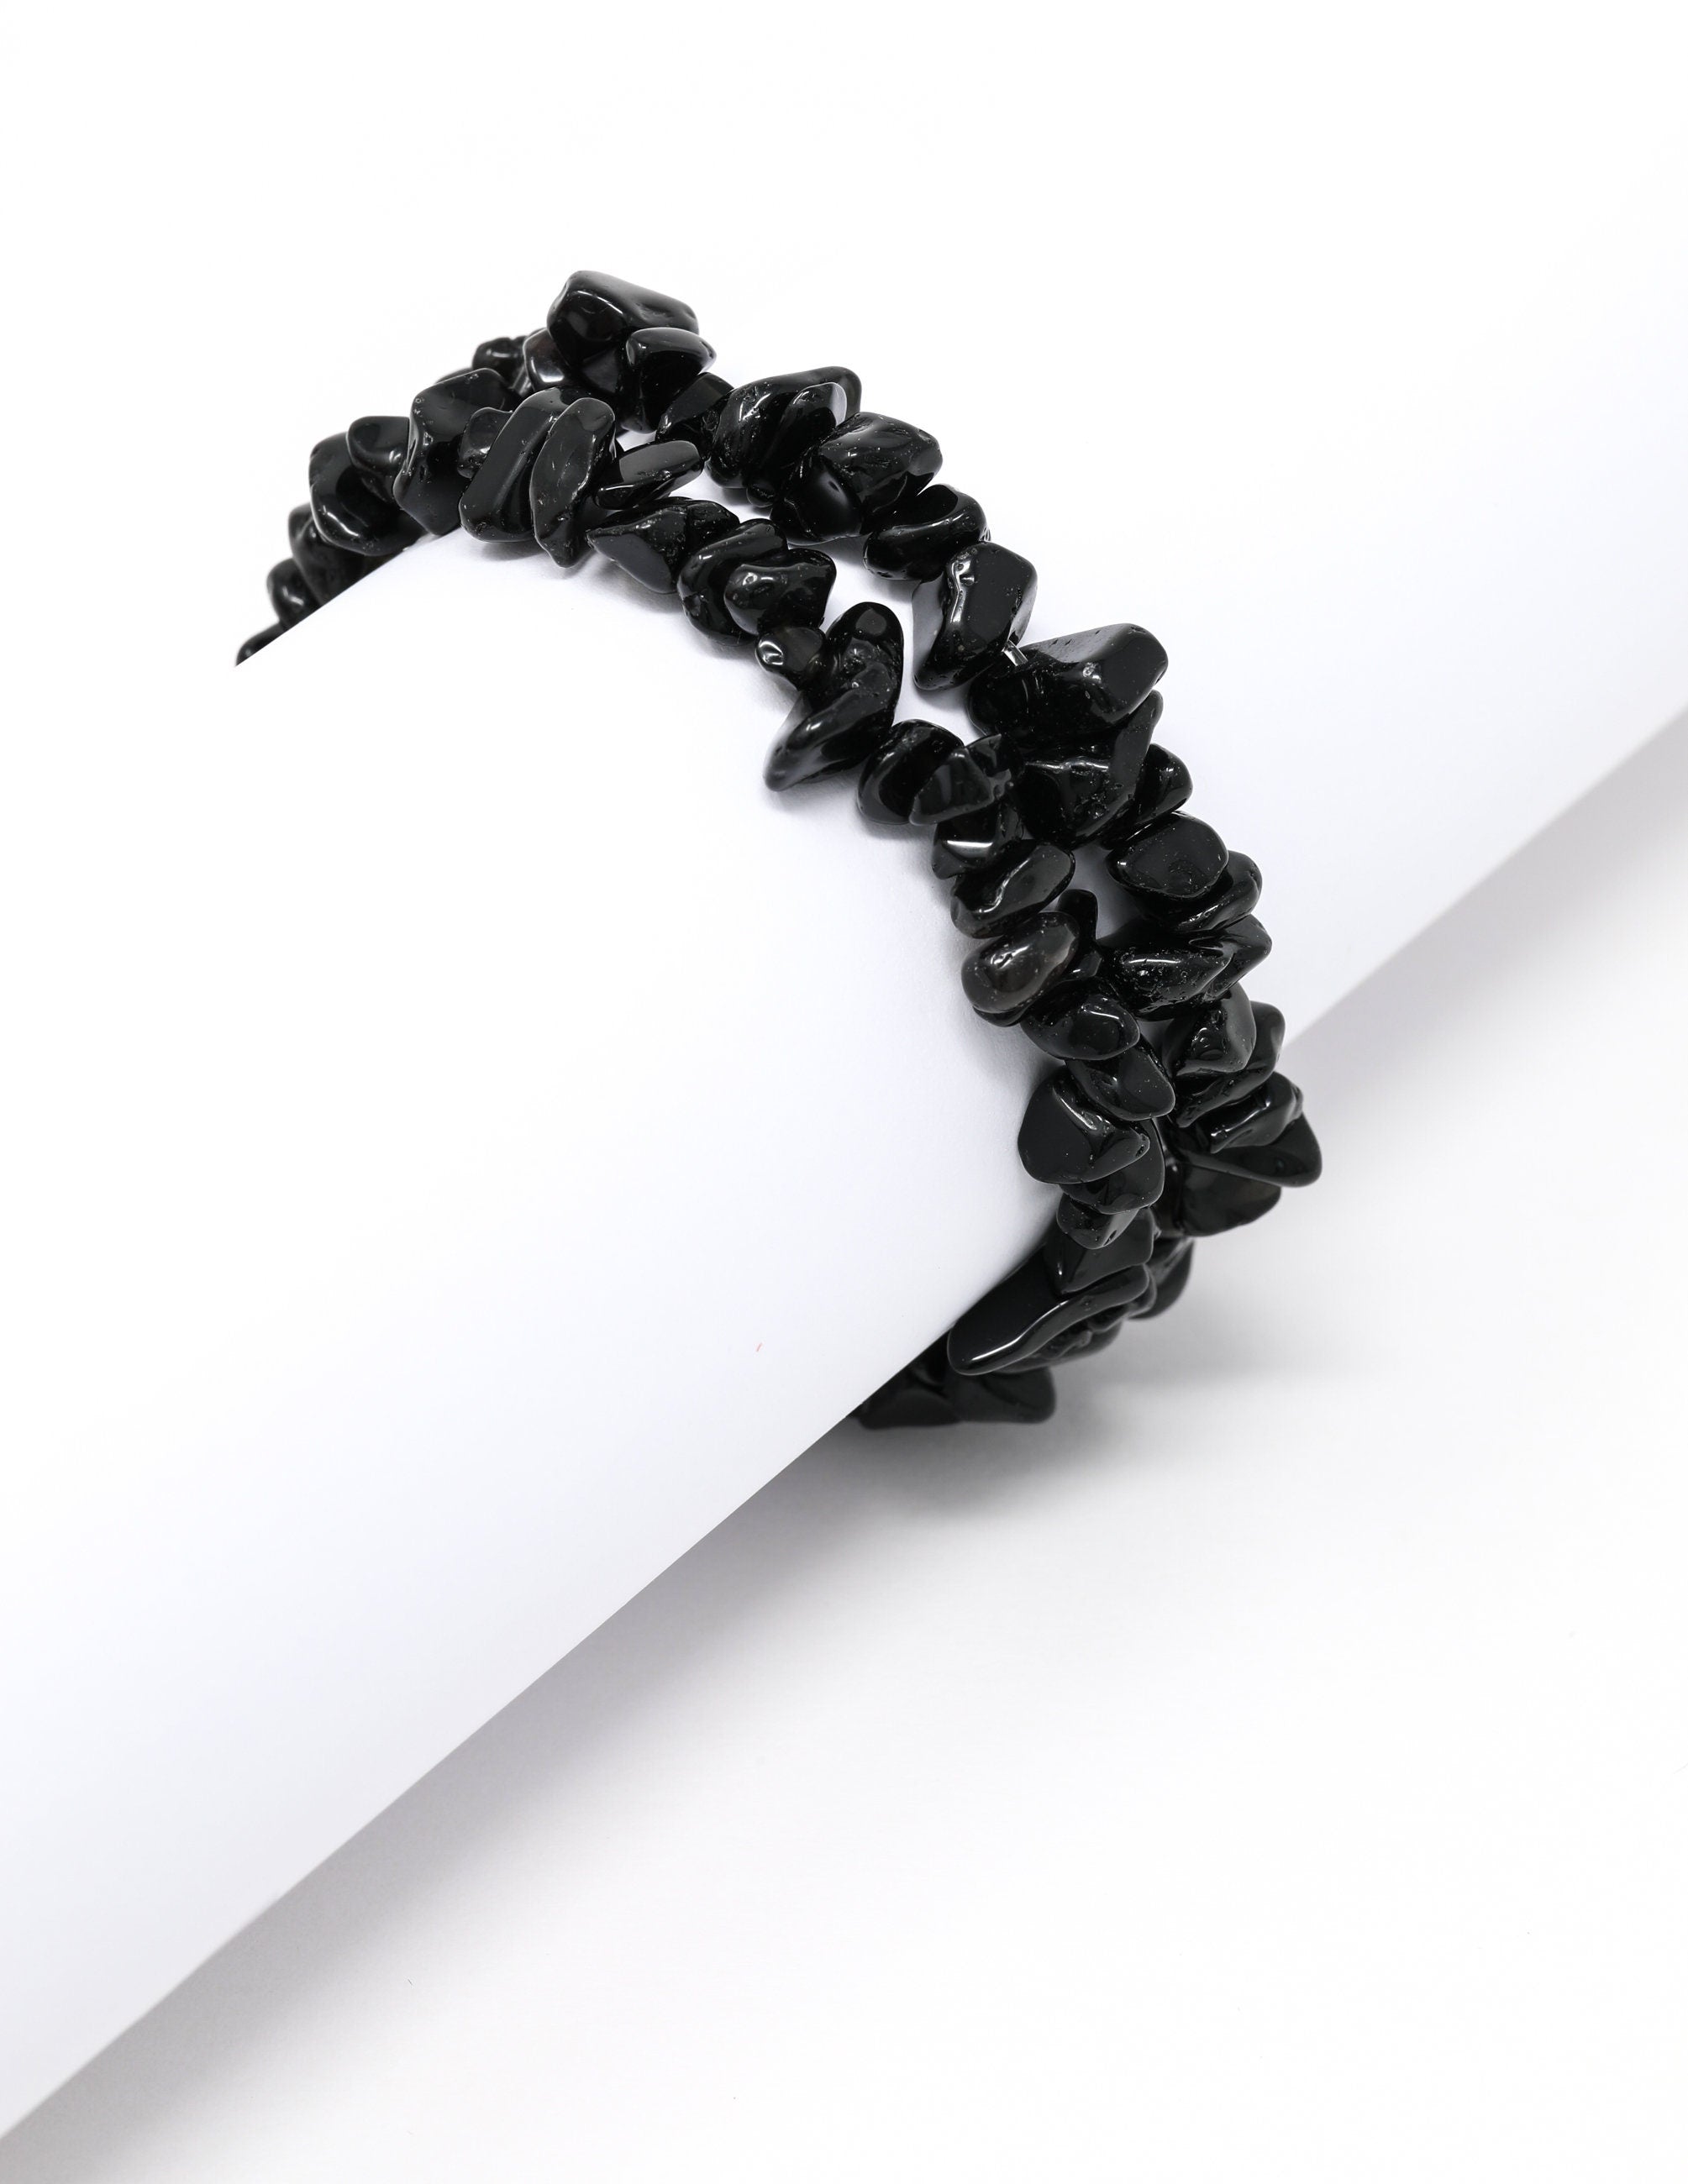 Black Obsidian Chip Bracelet